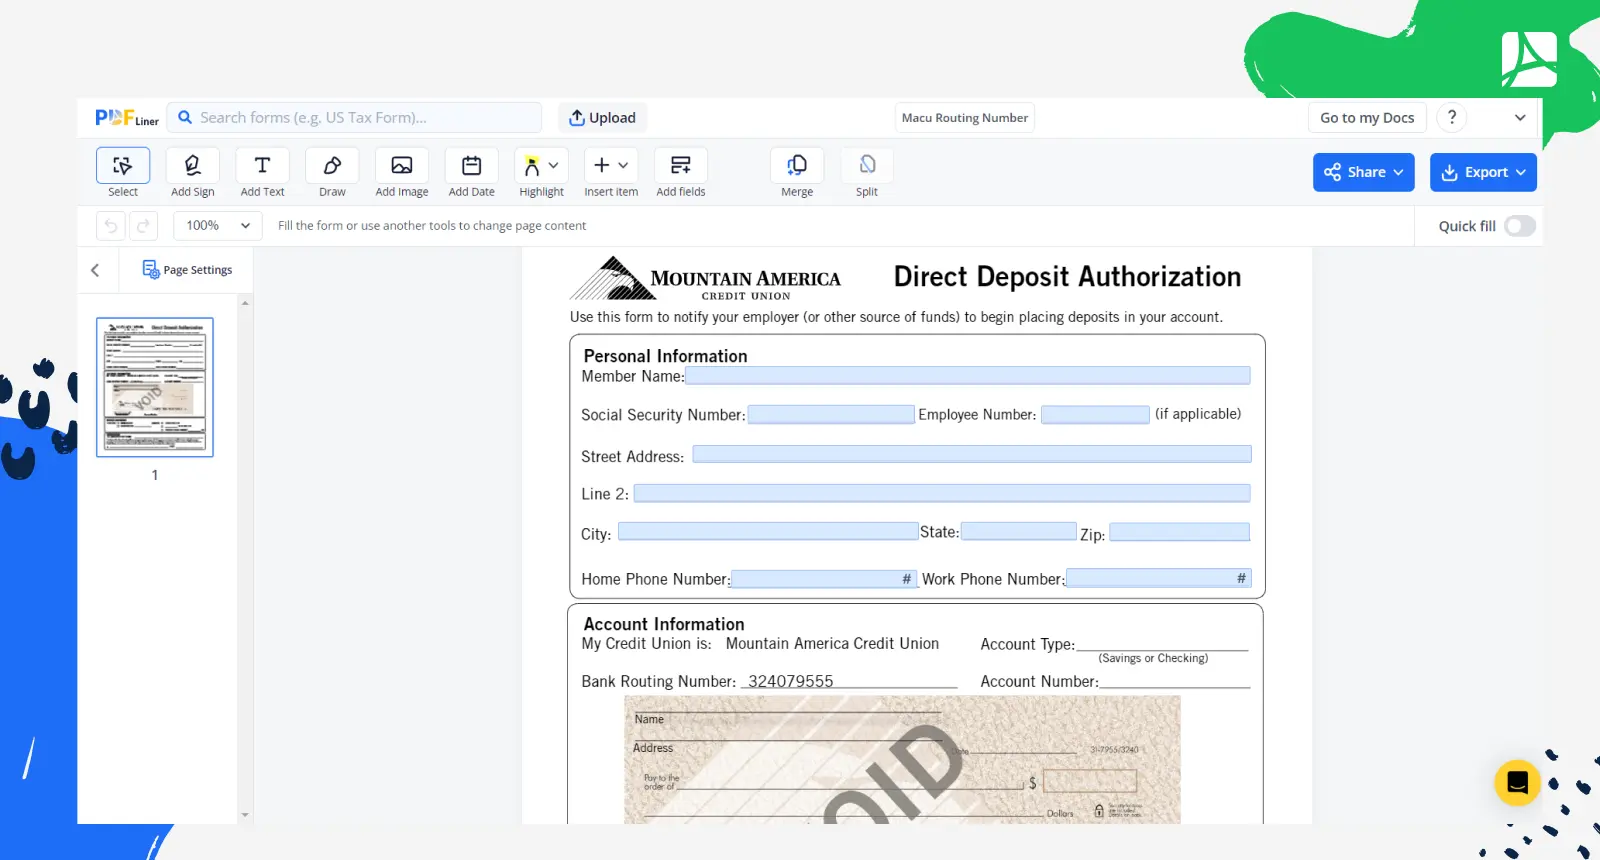 MACU Direct Deposit Form Screenshot